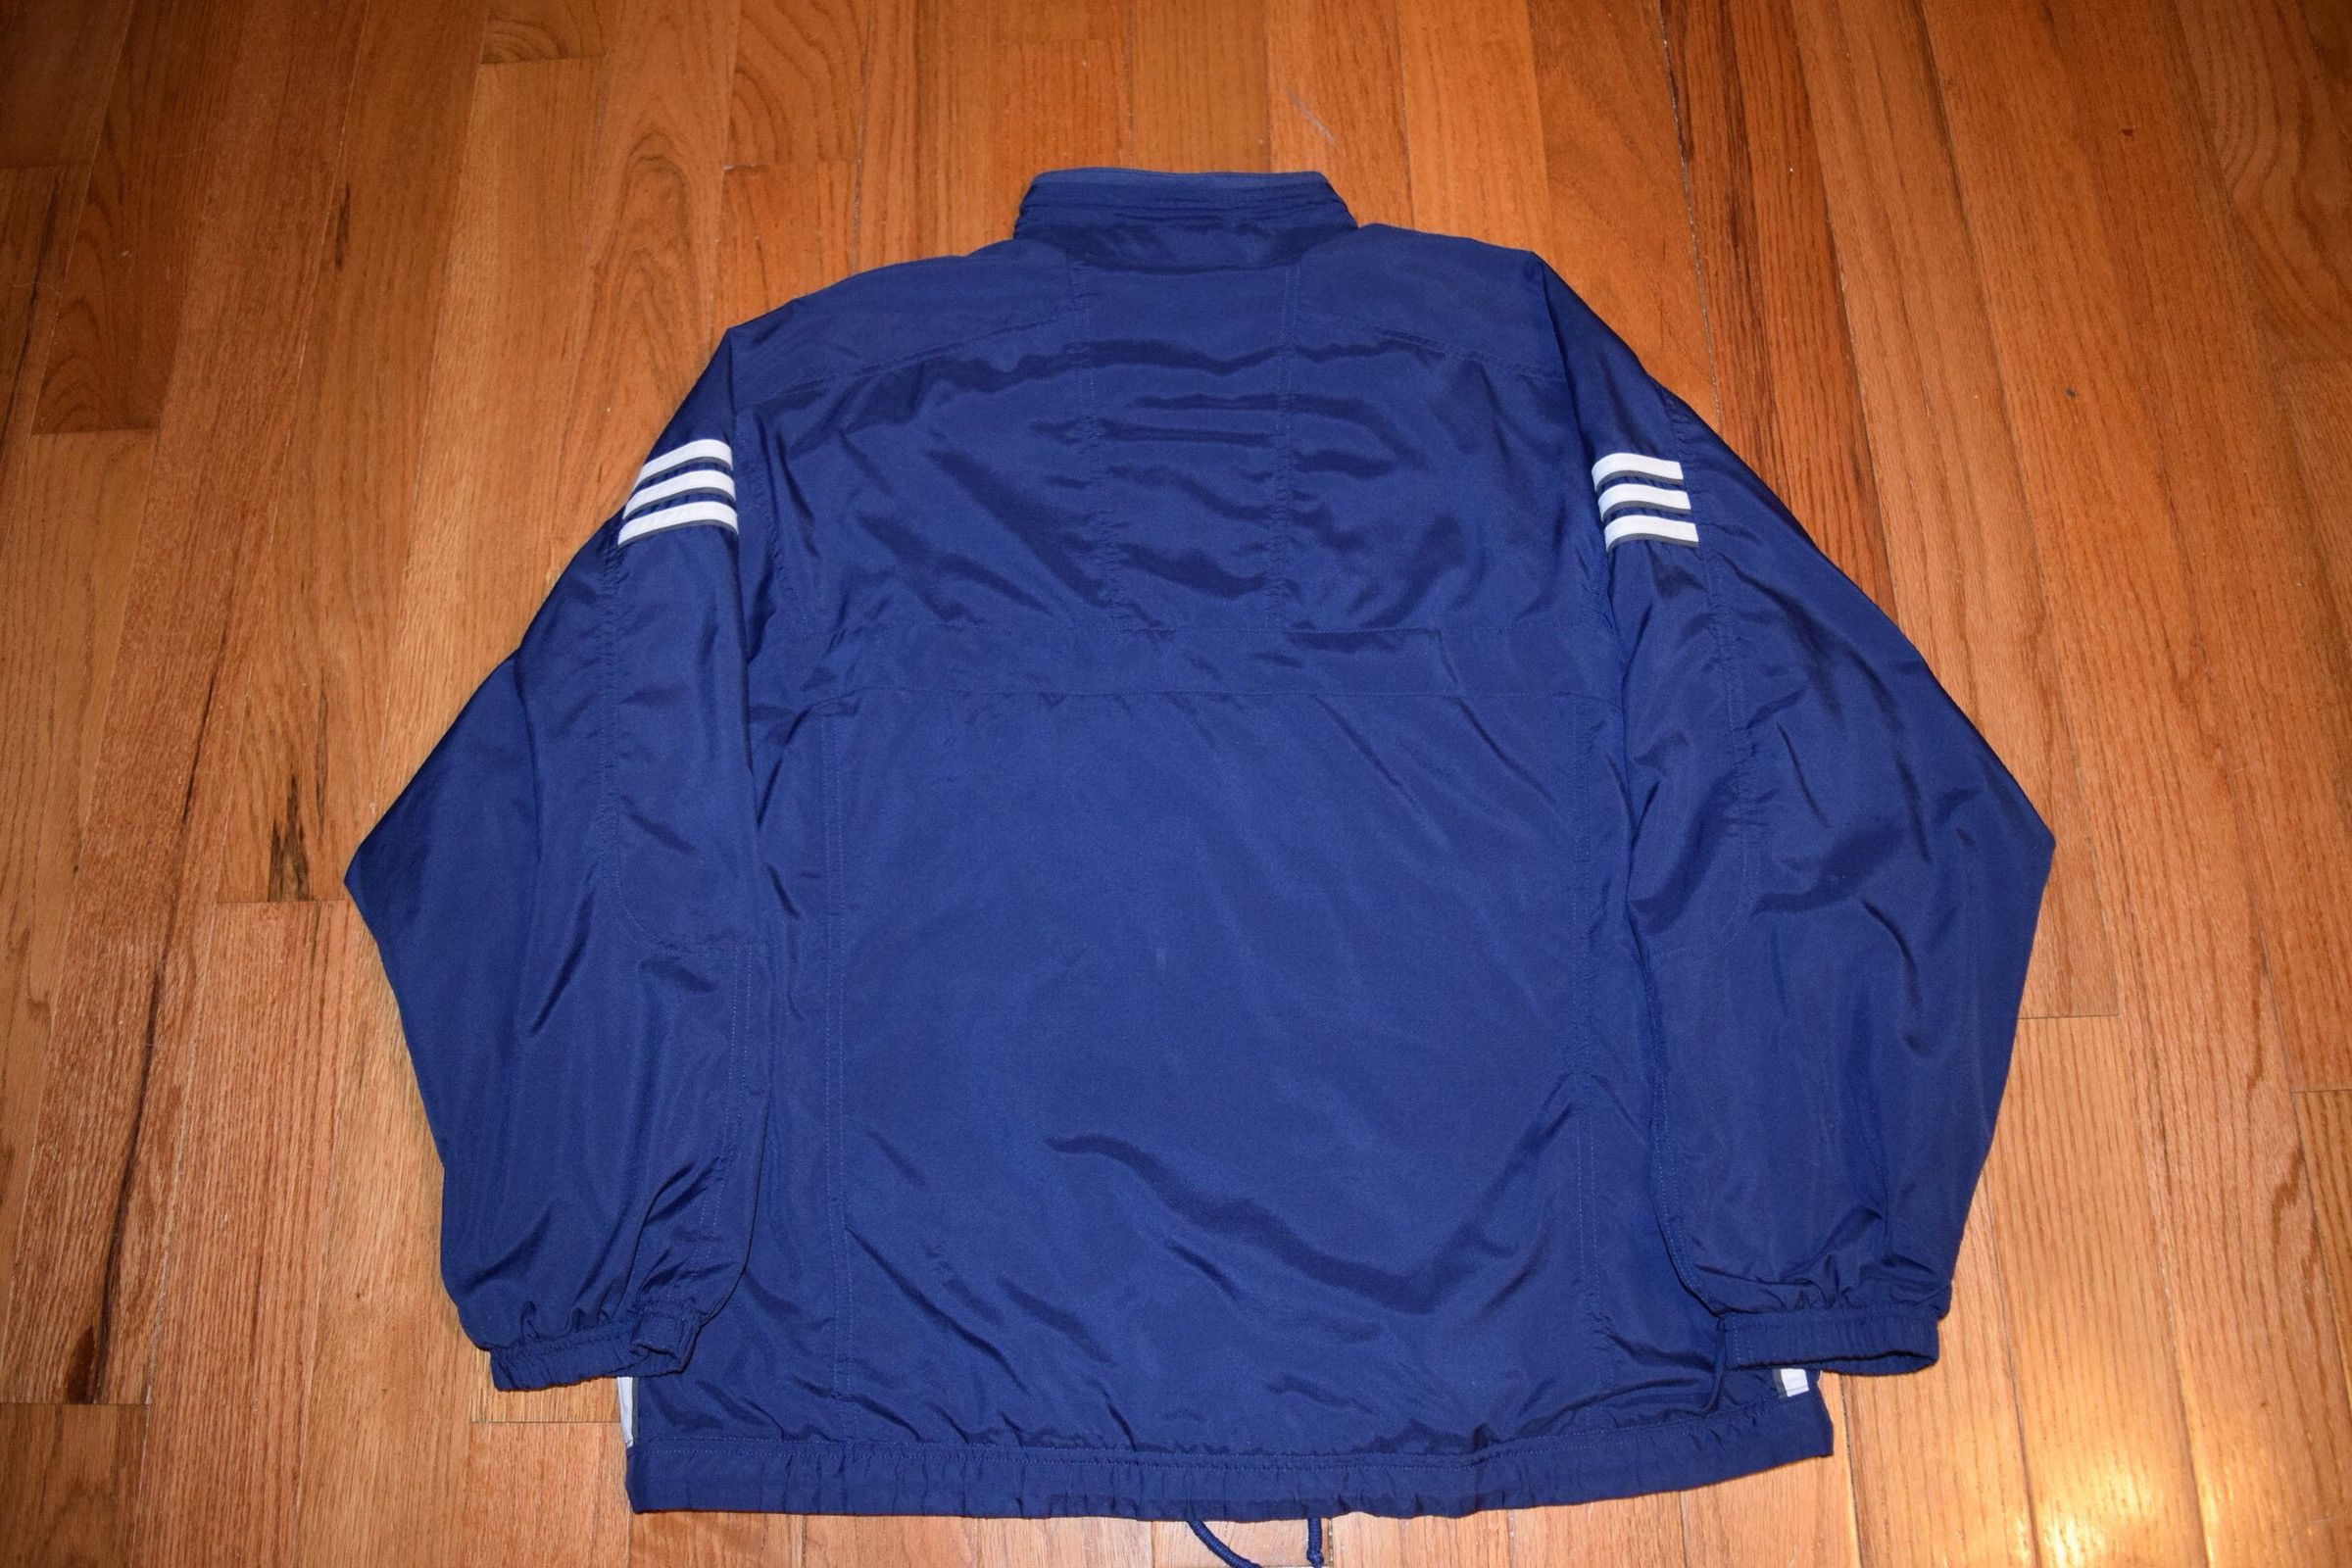 Adidas Vintage Adidas jacket Size US M / EU 48-50 / 2 - 4 Preview